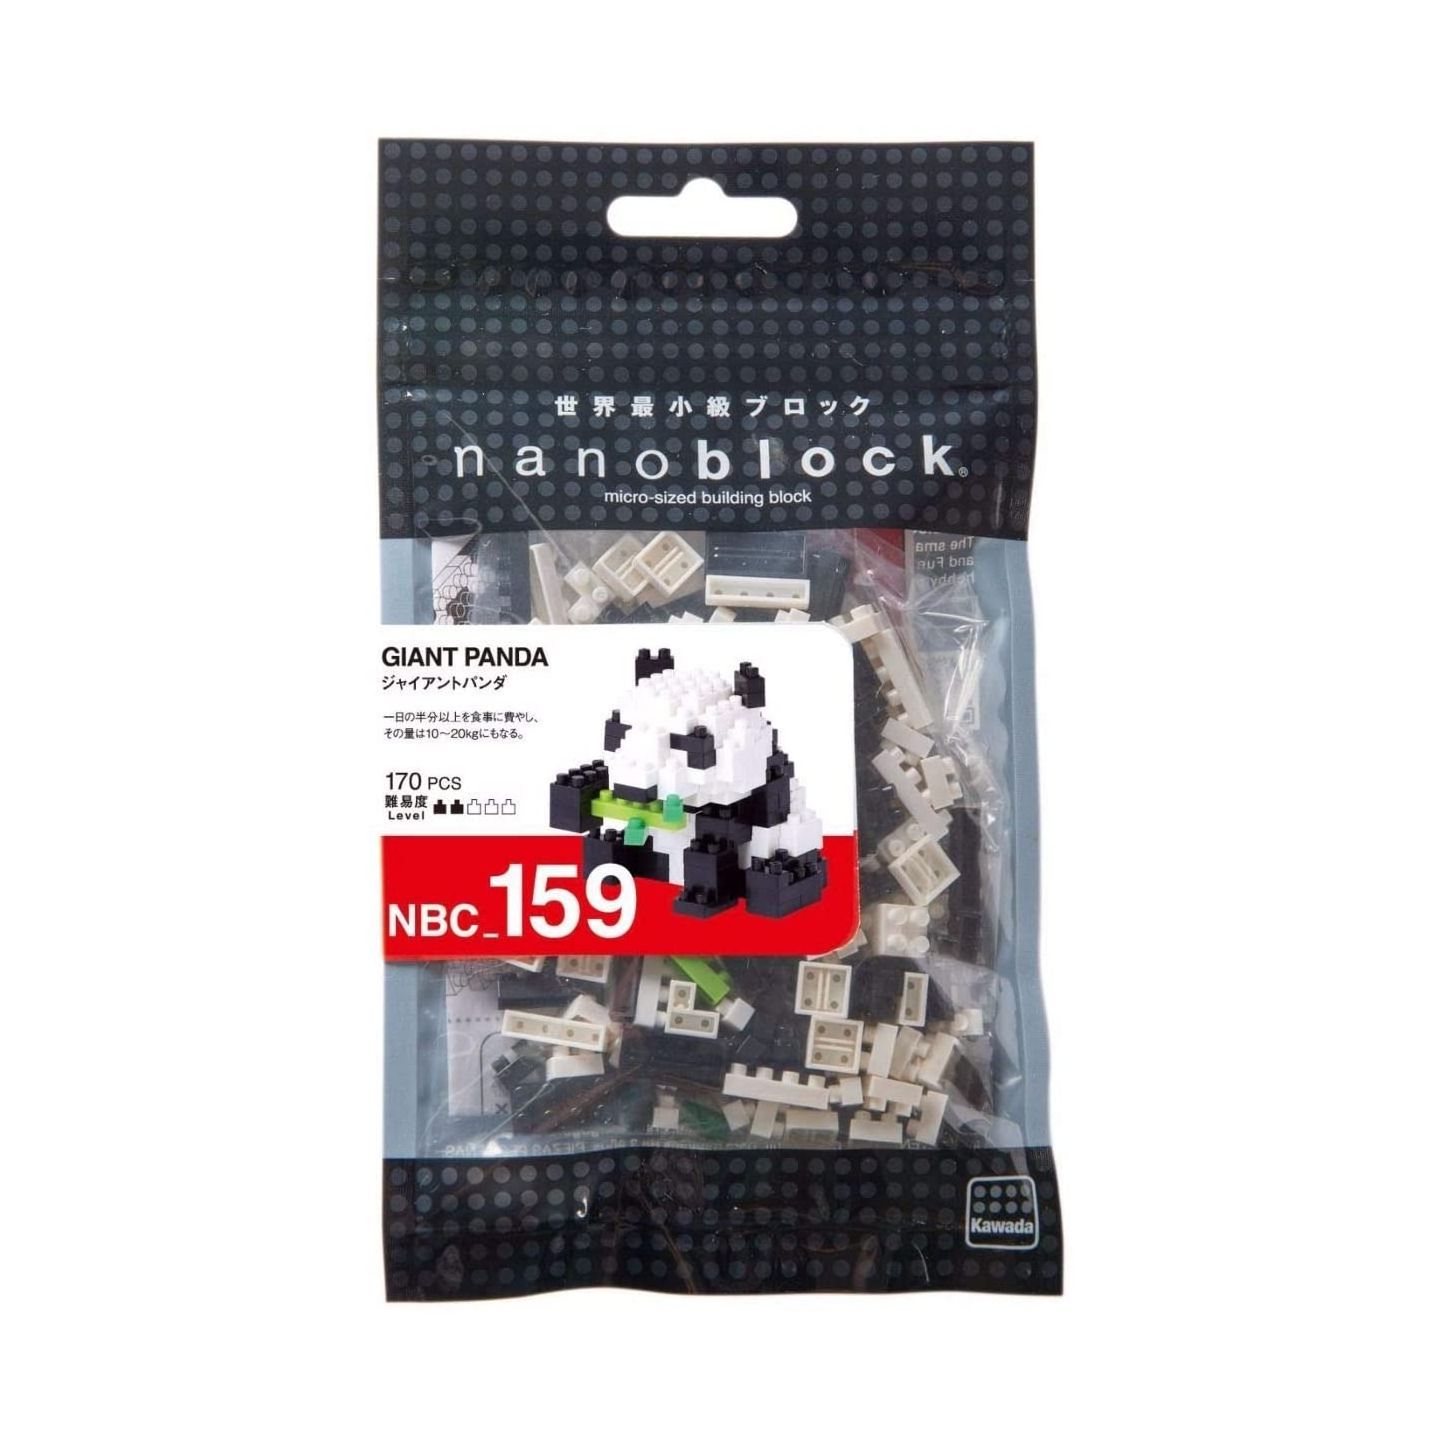 NANOBLOCK Red Panda Nano Block Micro-Sized Building Blocks Nanoblocks NBC-194 